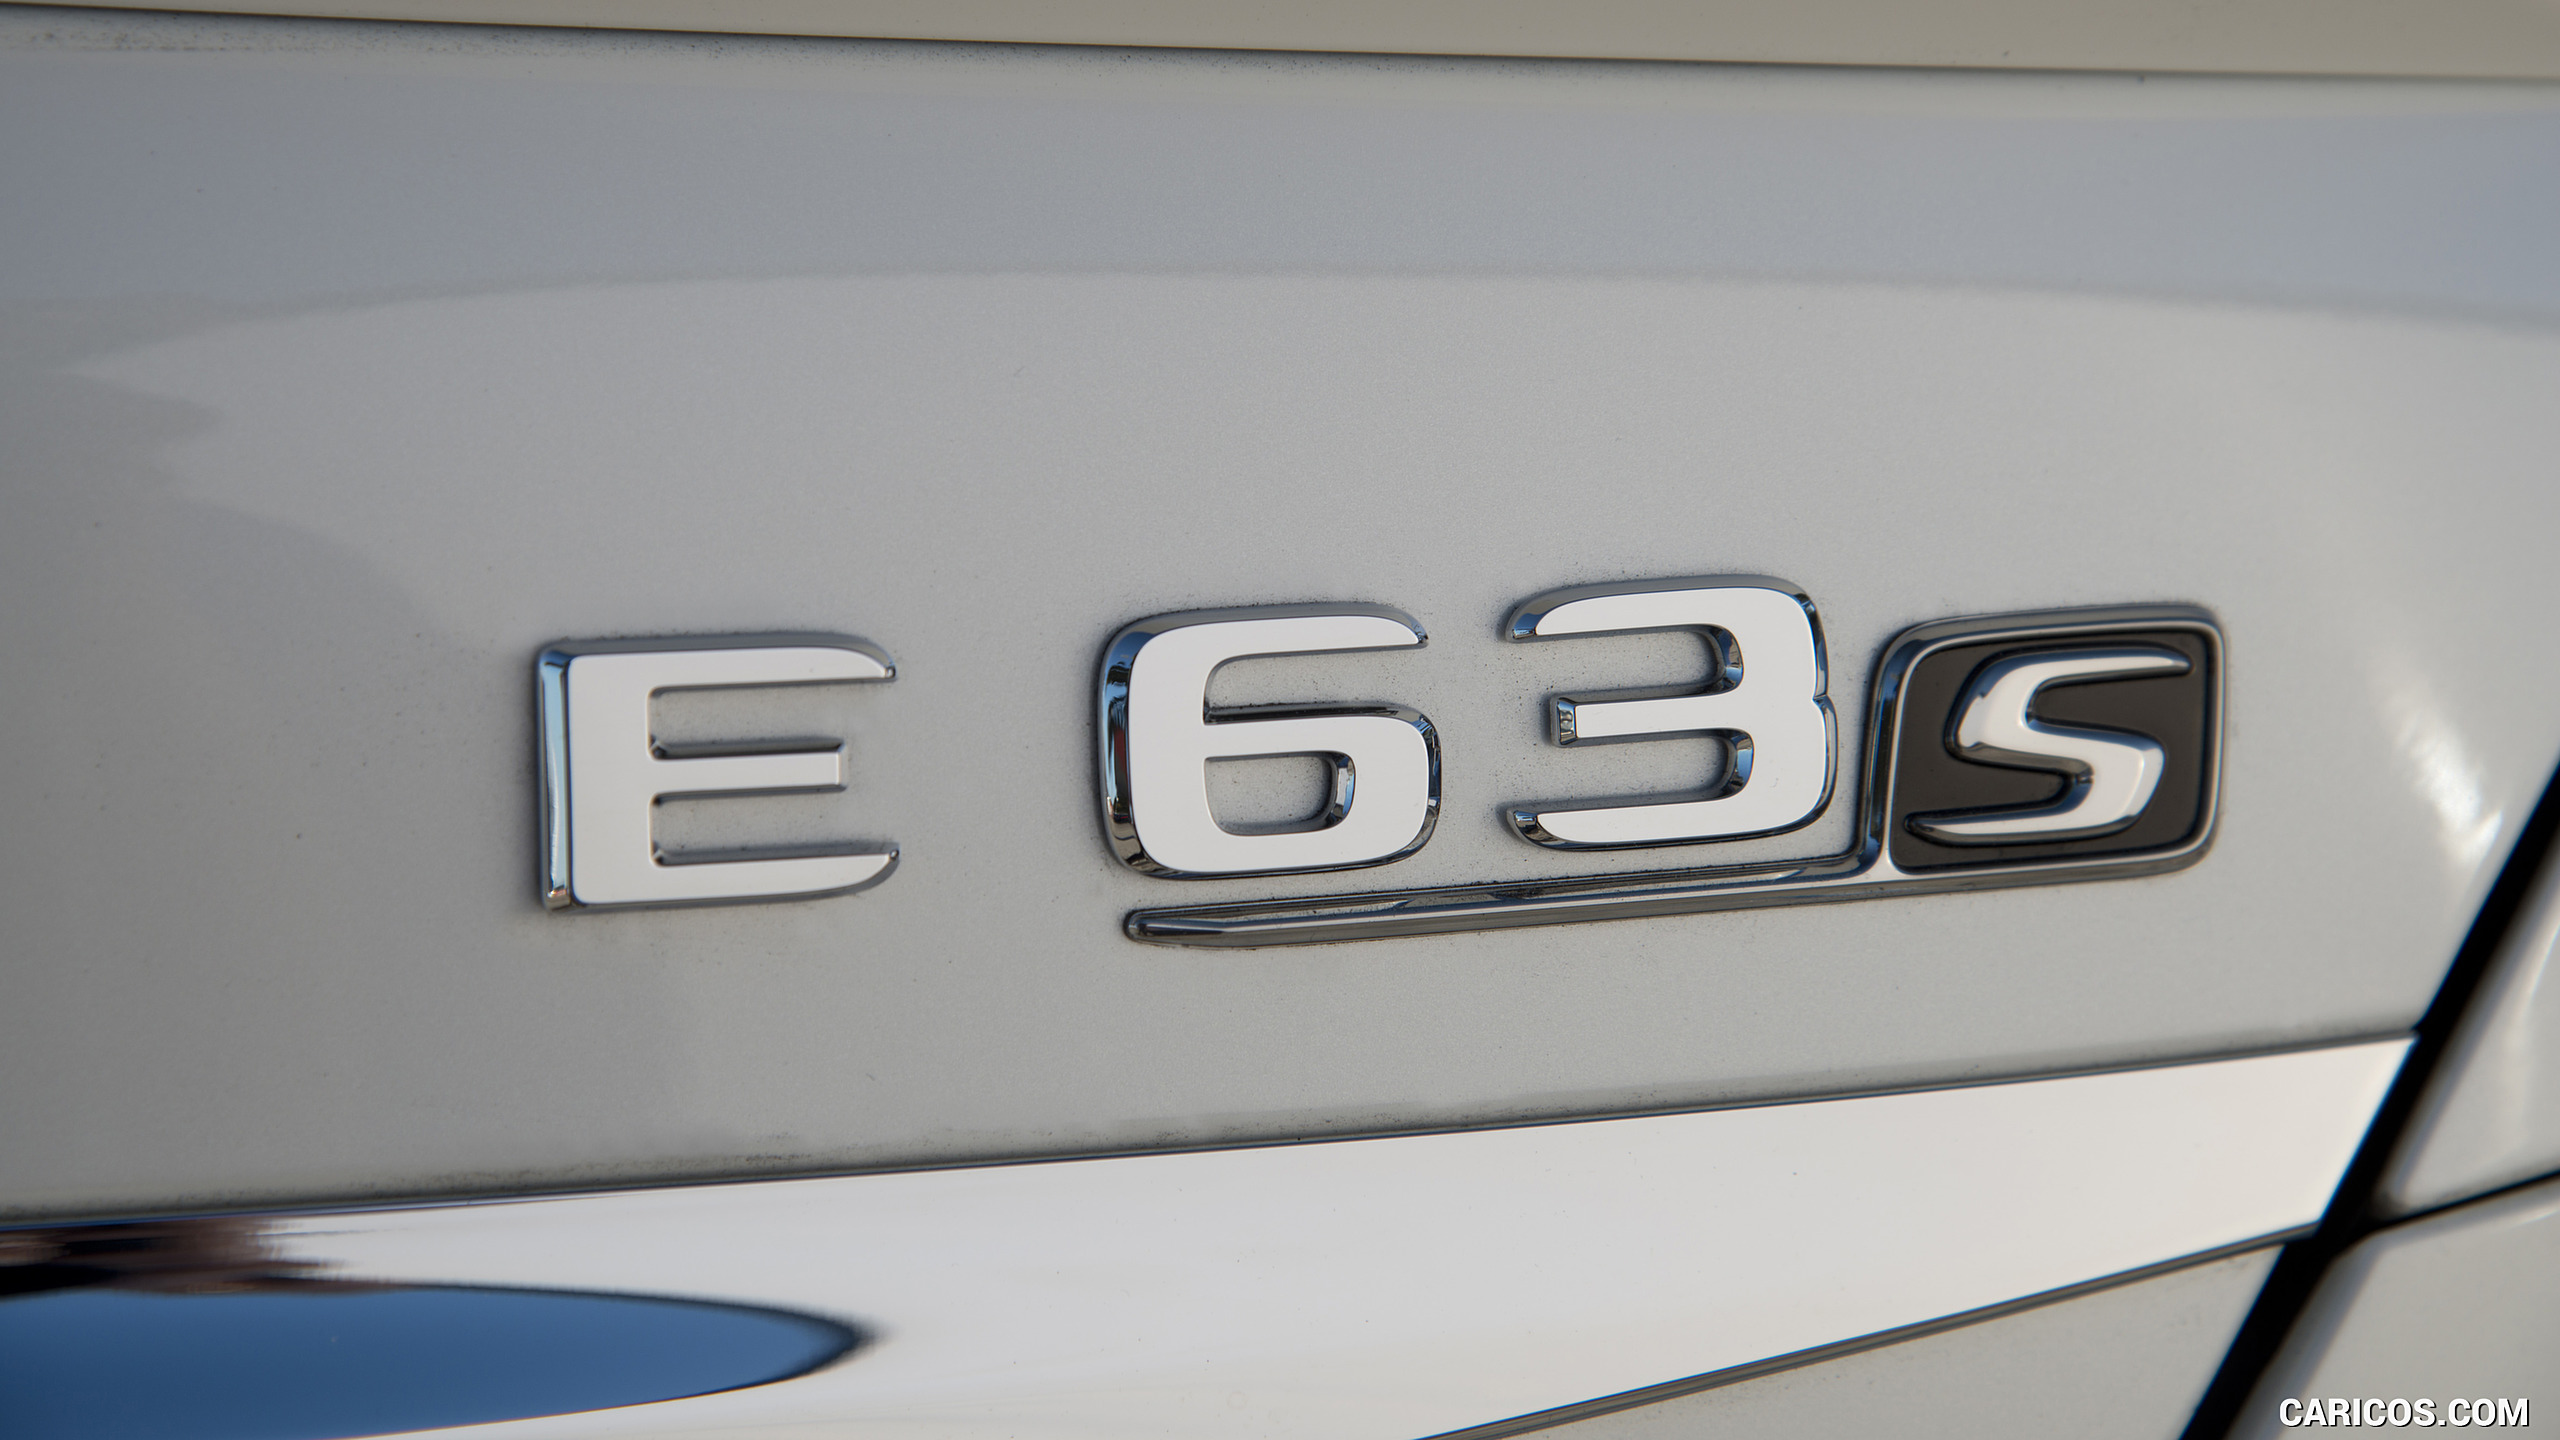 2018 Mercedes-AMG E63 S 4MATIC+ - Badge, #132 of 323